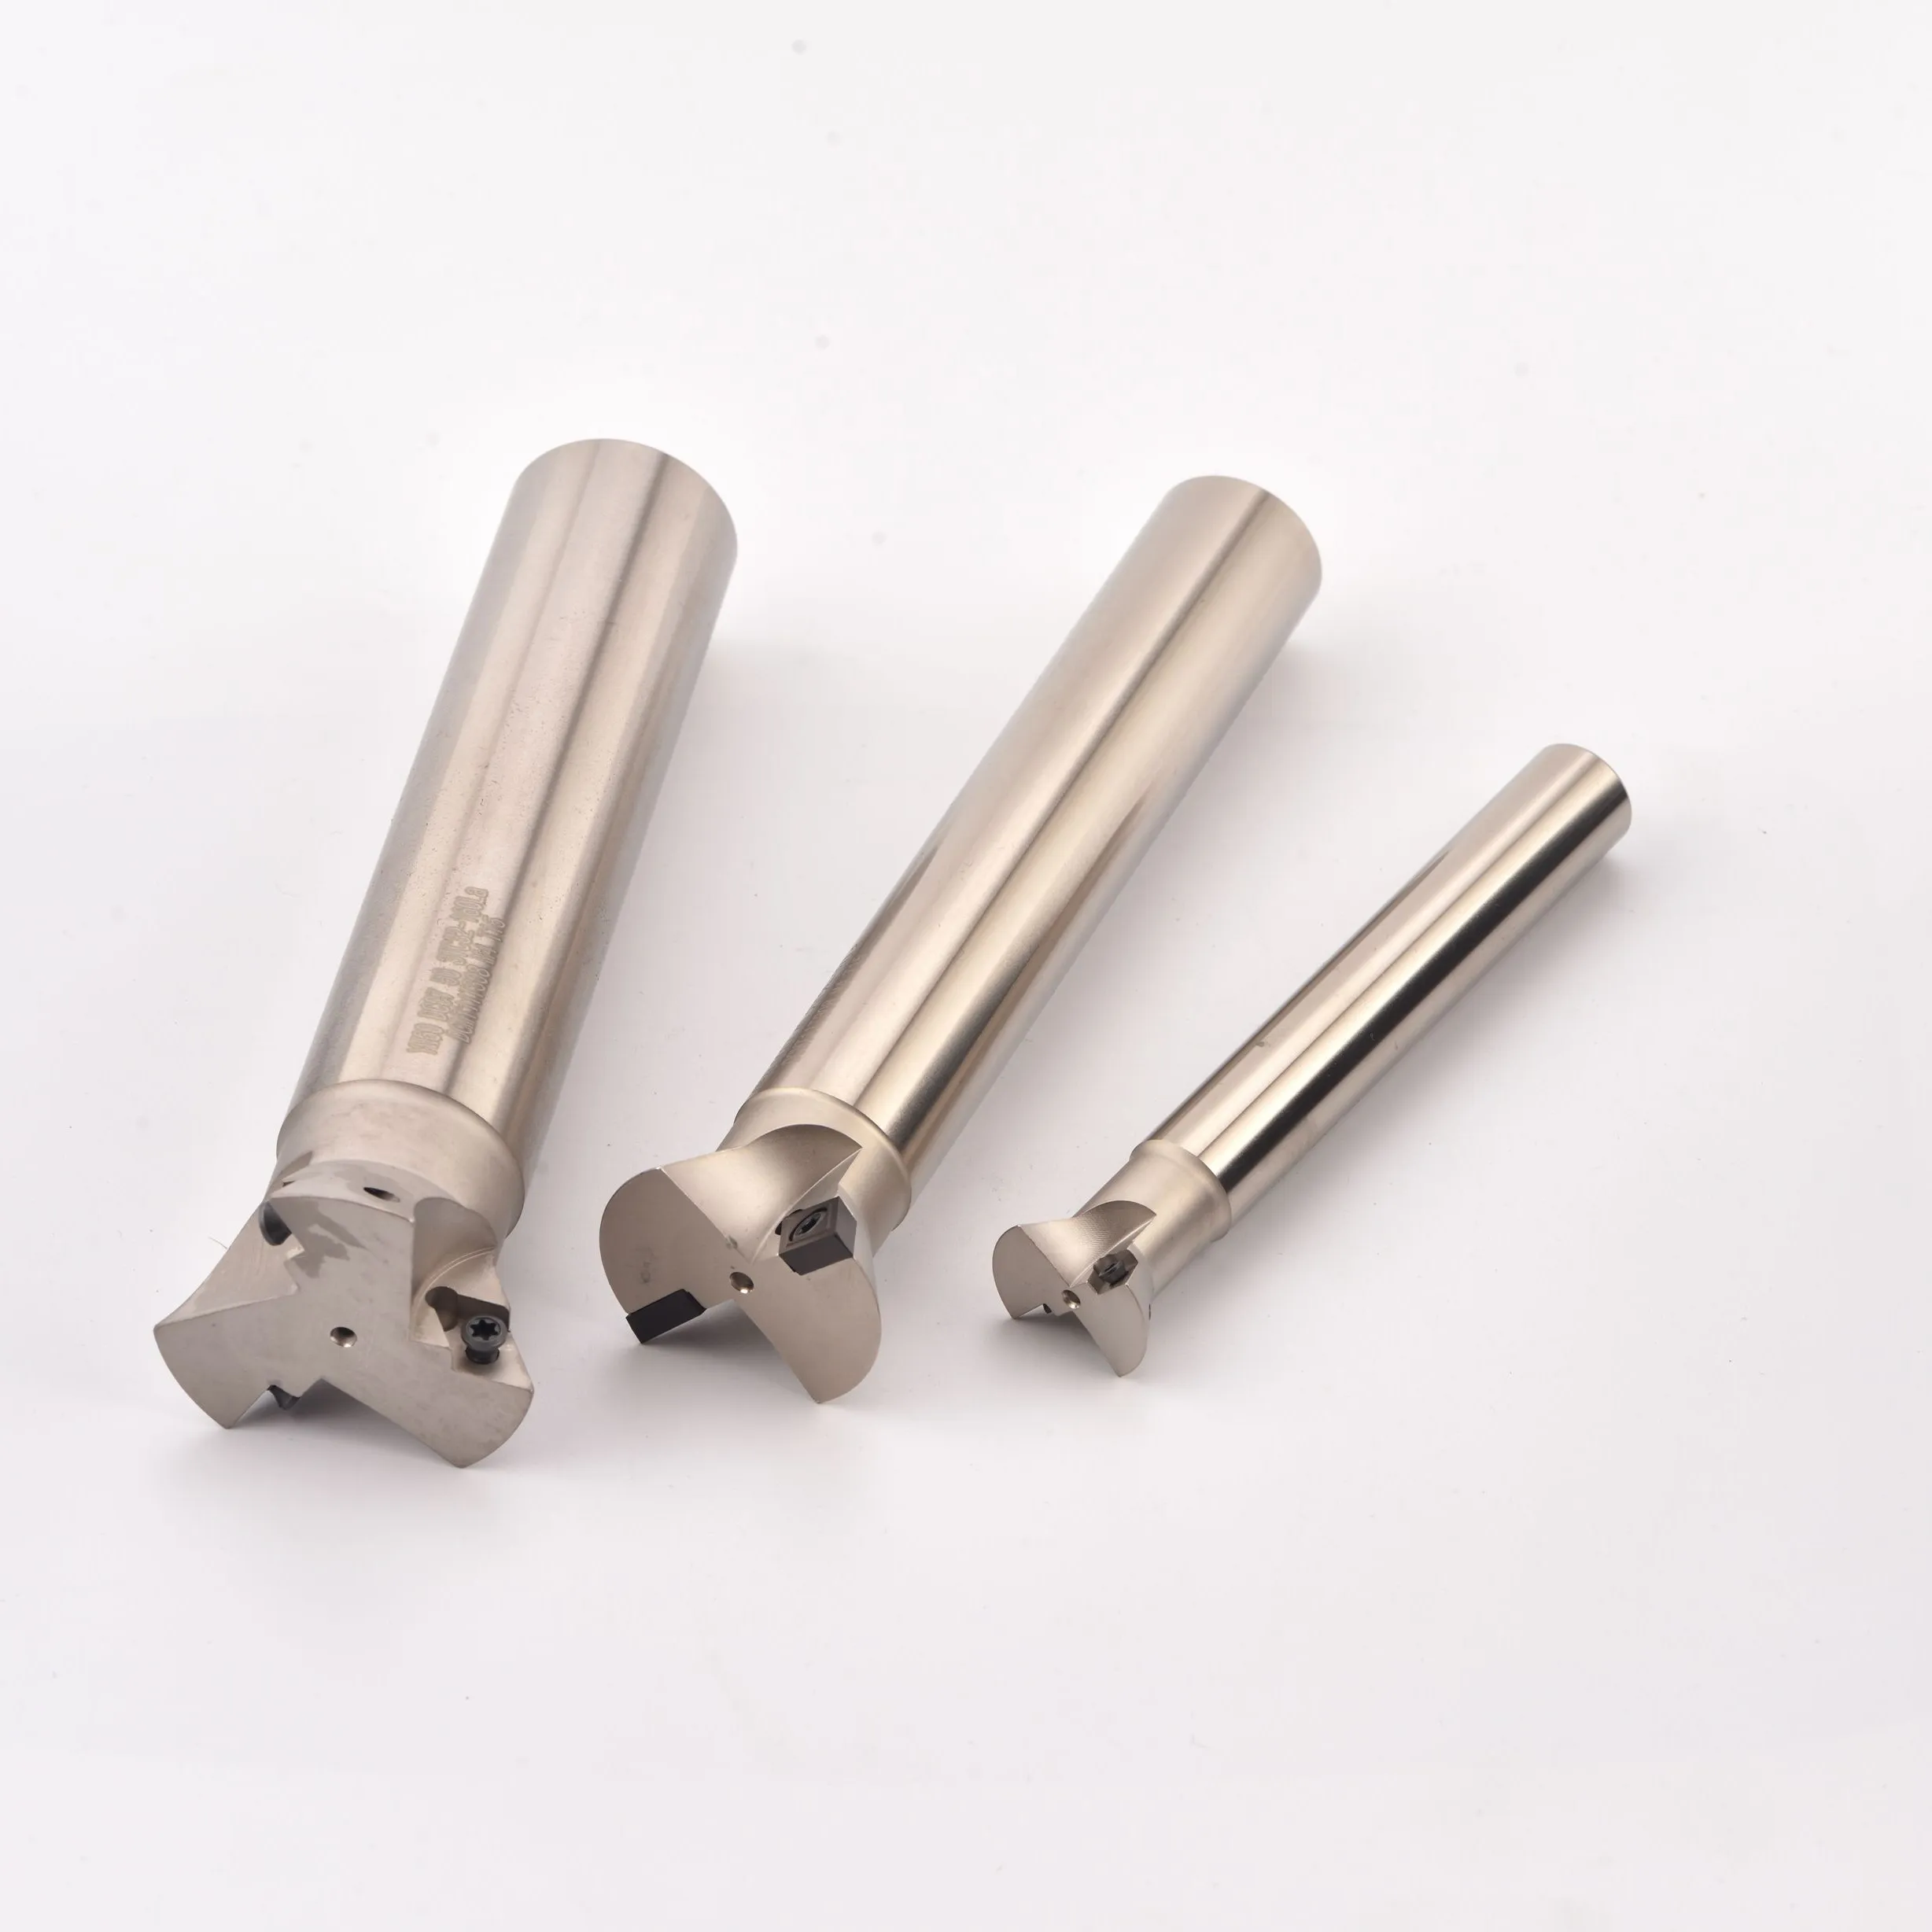 Dovetall Slot Flat Milling Tools Cutter Carbide Set For Metal